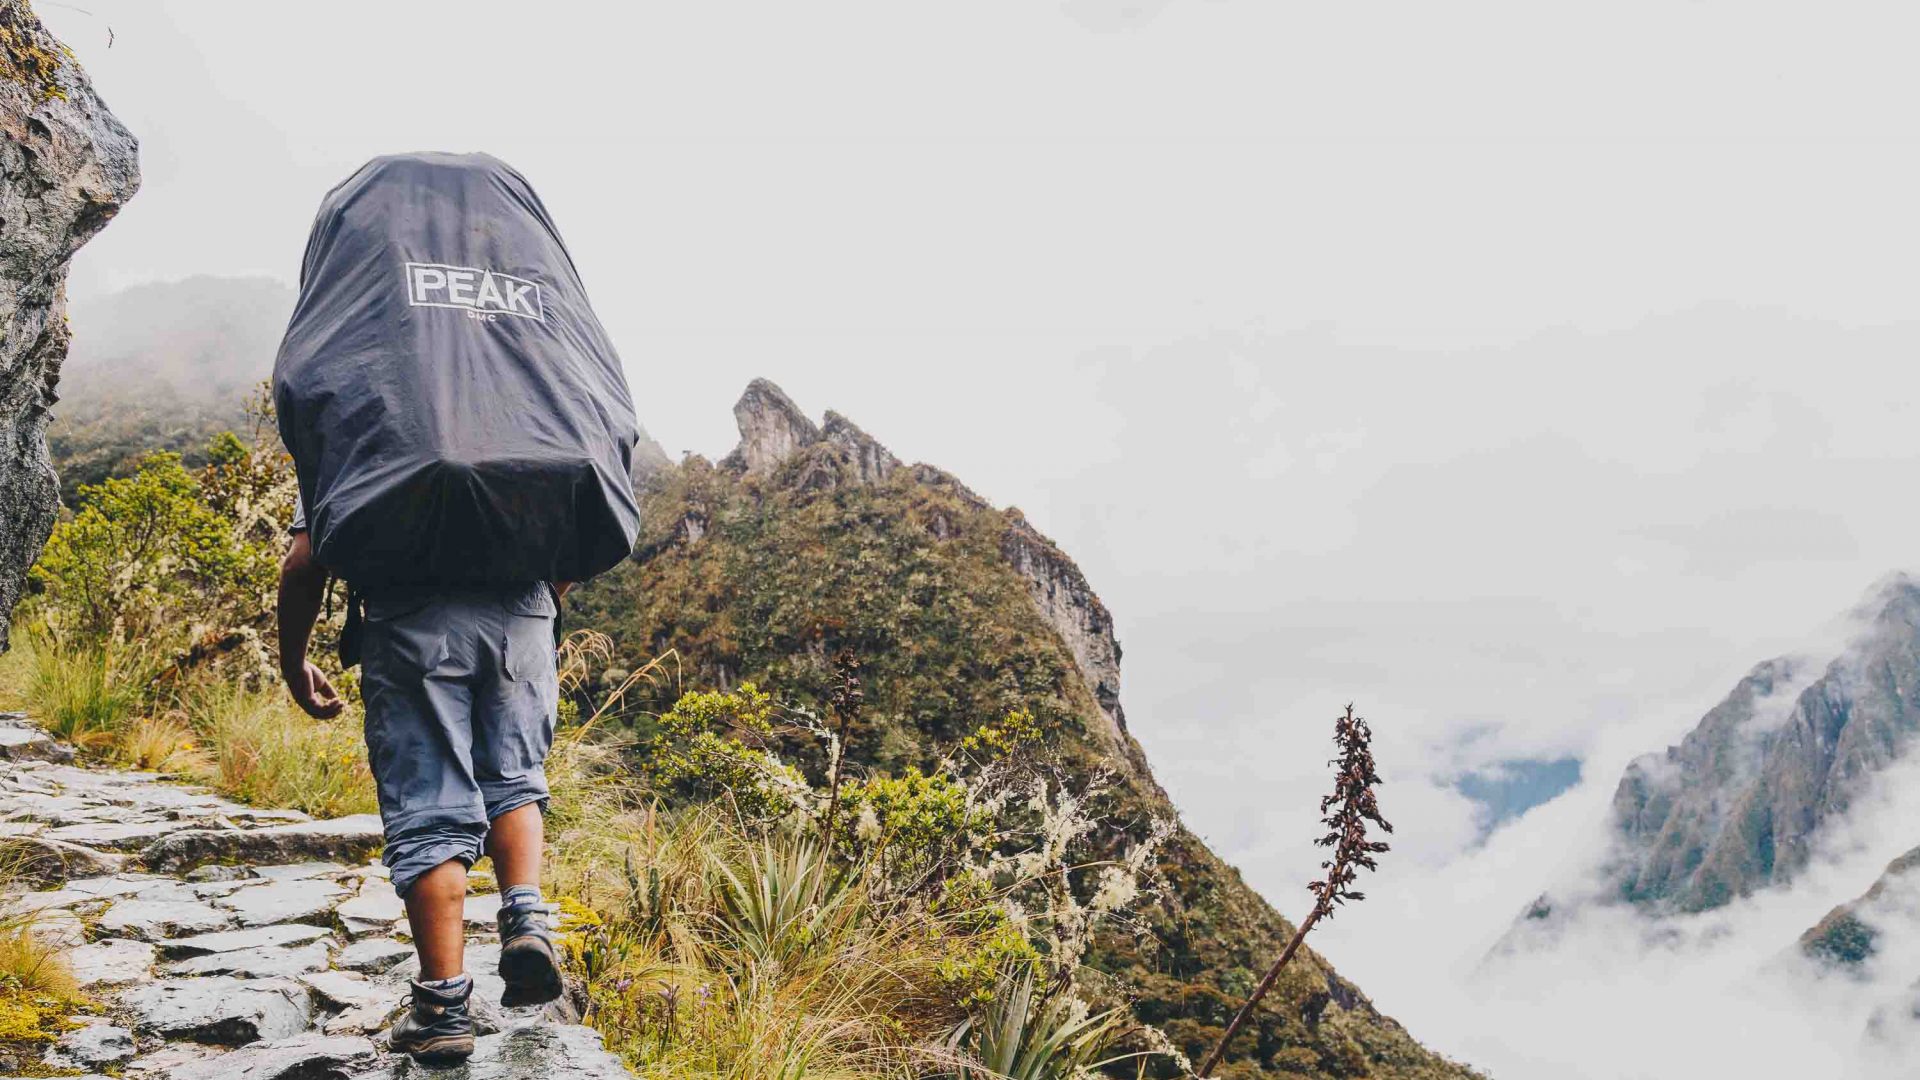 A porter climbs a steep mountain on the Inca Trail, Peru.